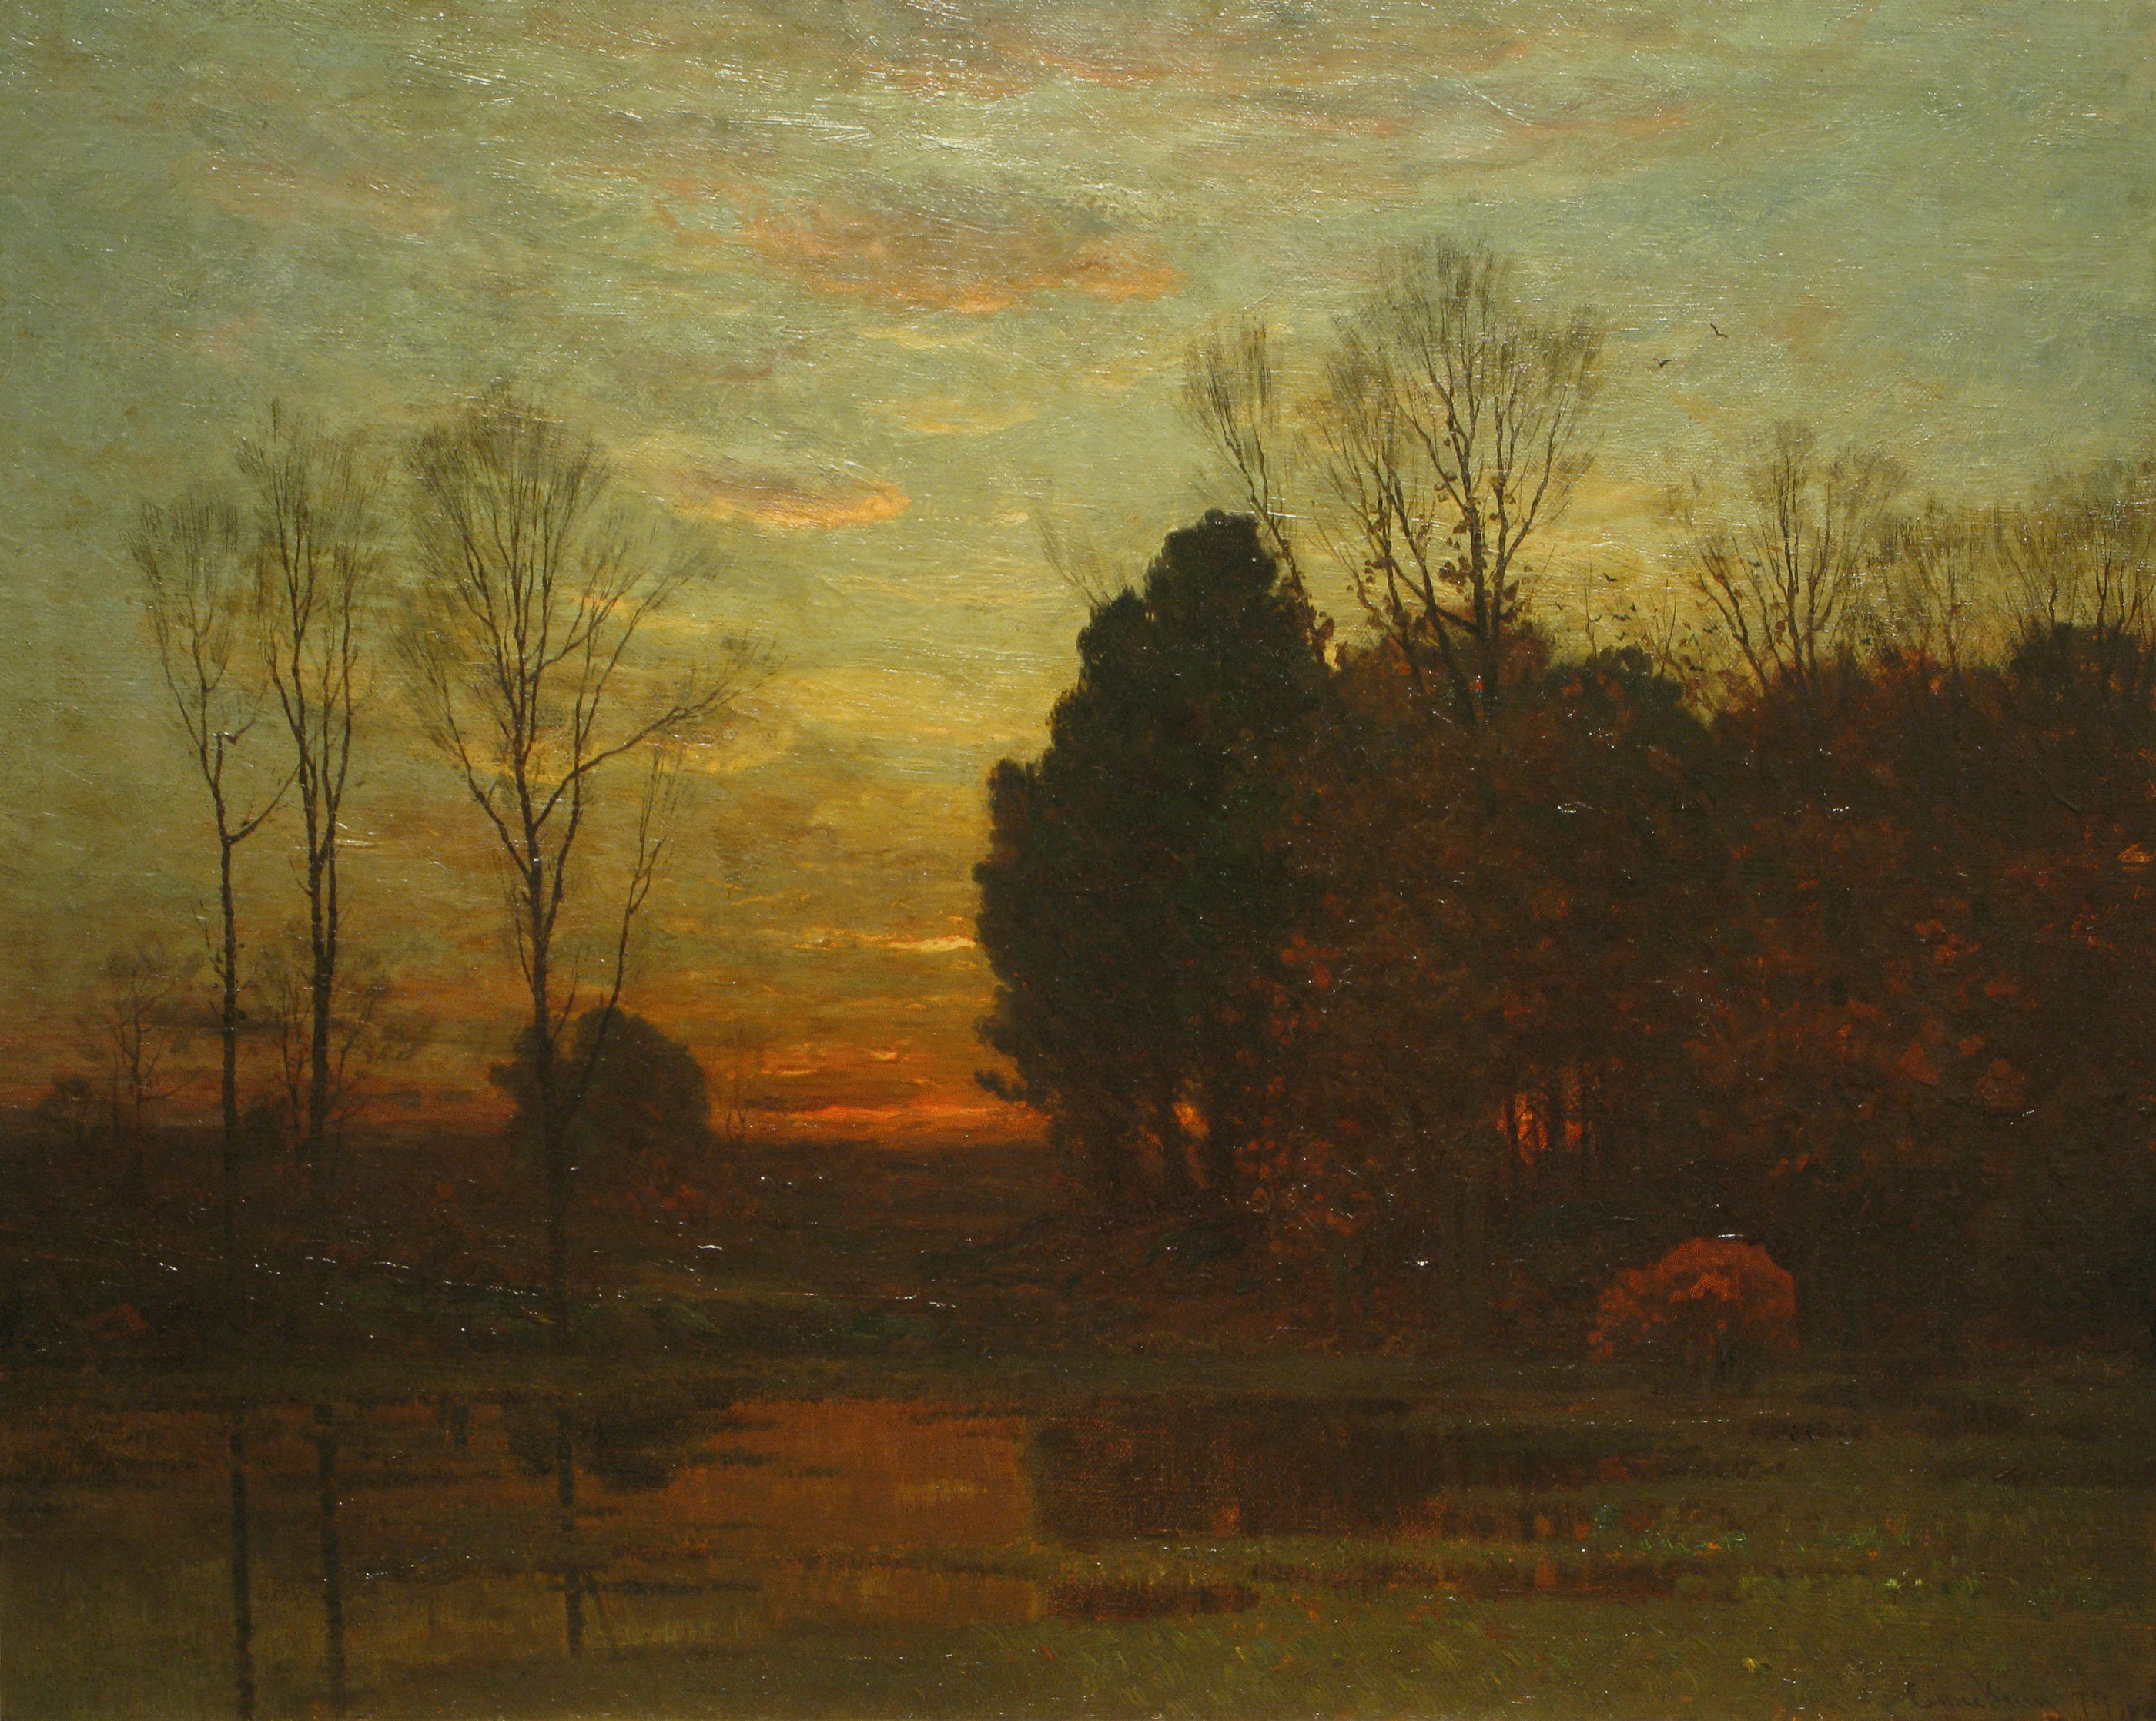 Tranquility at Sunset by John Joseph Enneking